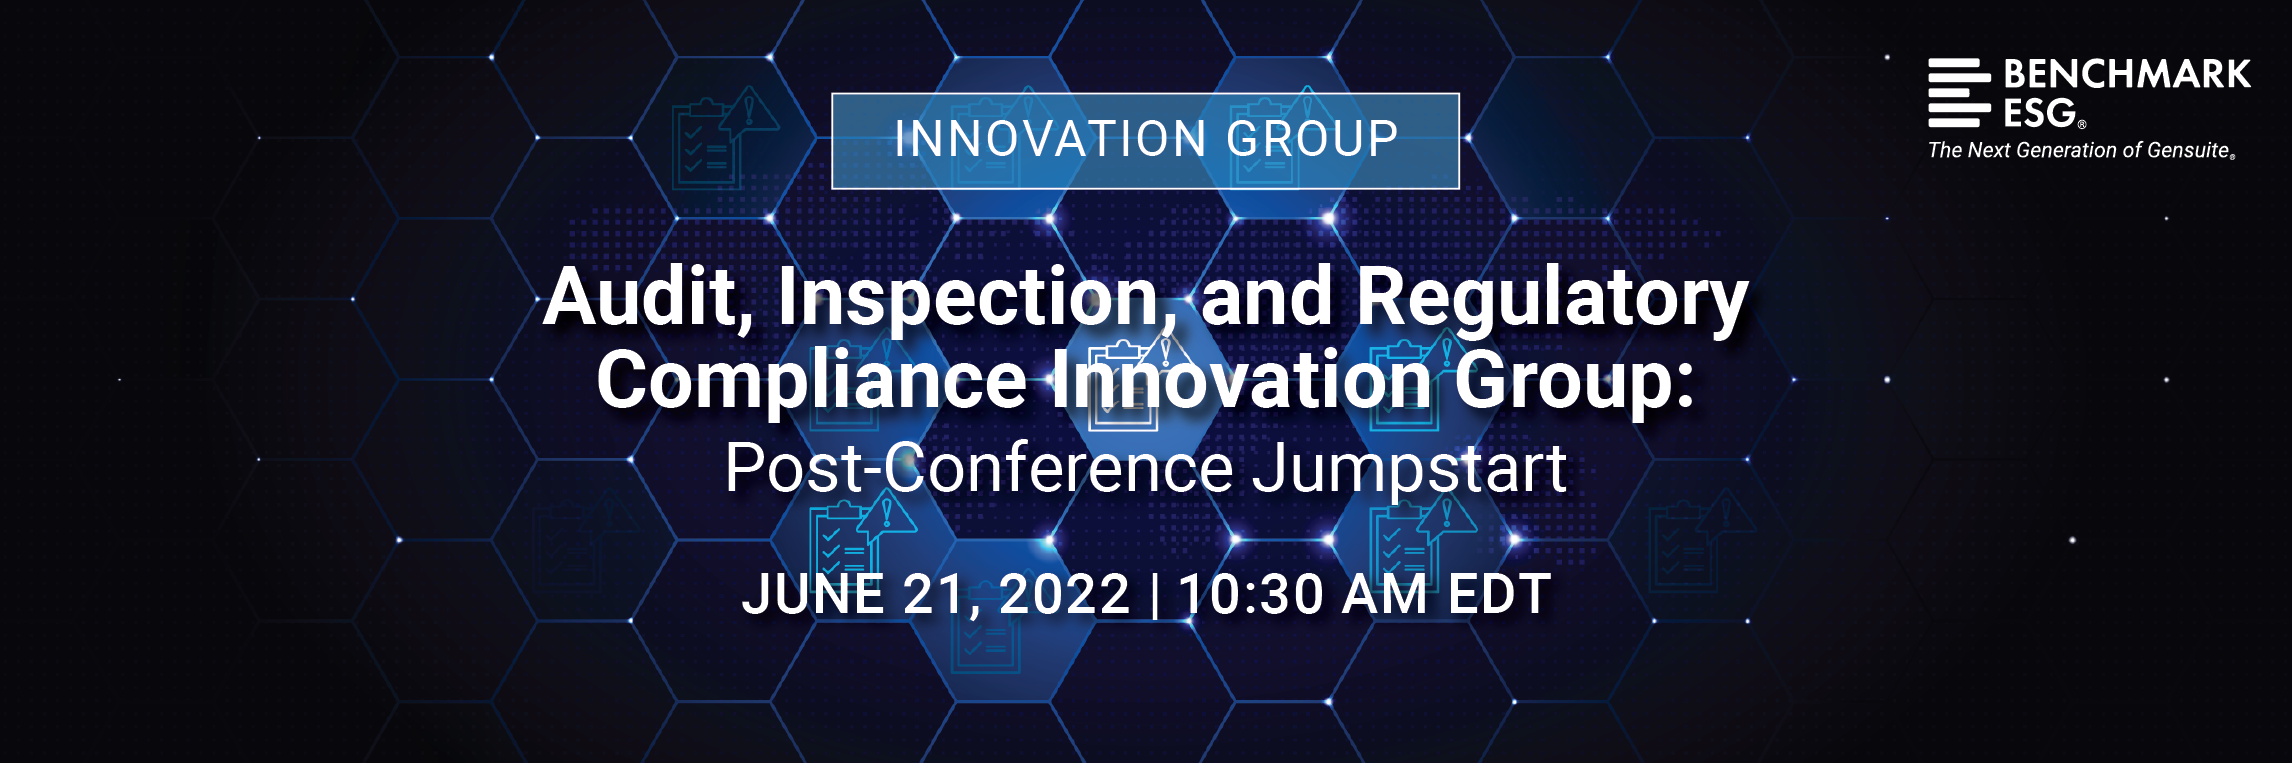 Webinar Banner for Audit, Inspection, and Regulatory Compliance Innovation Group